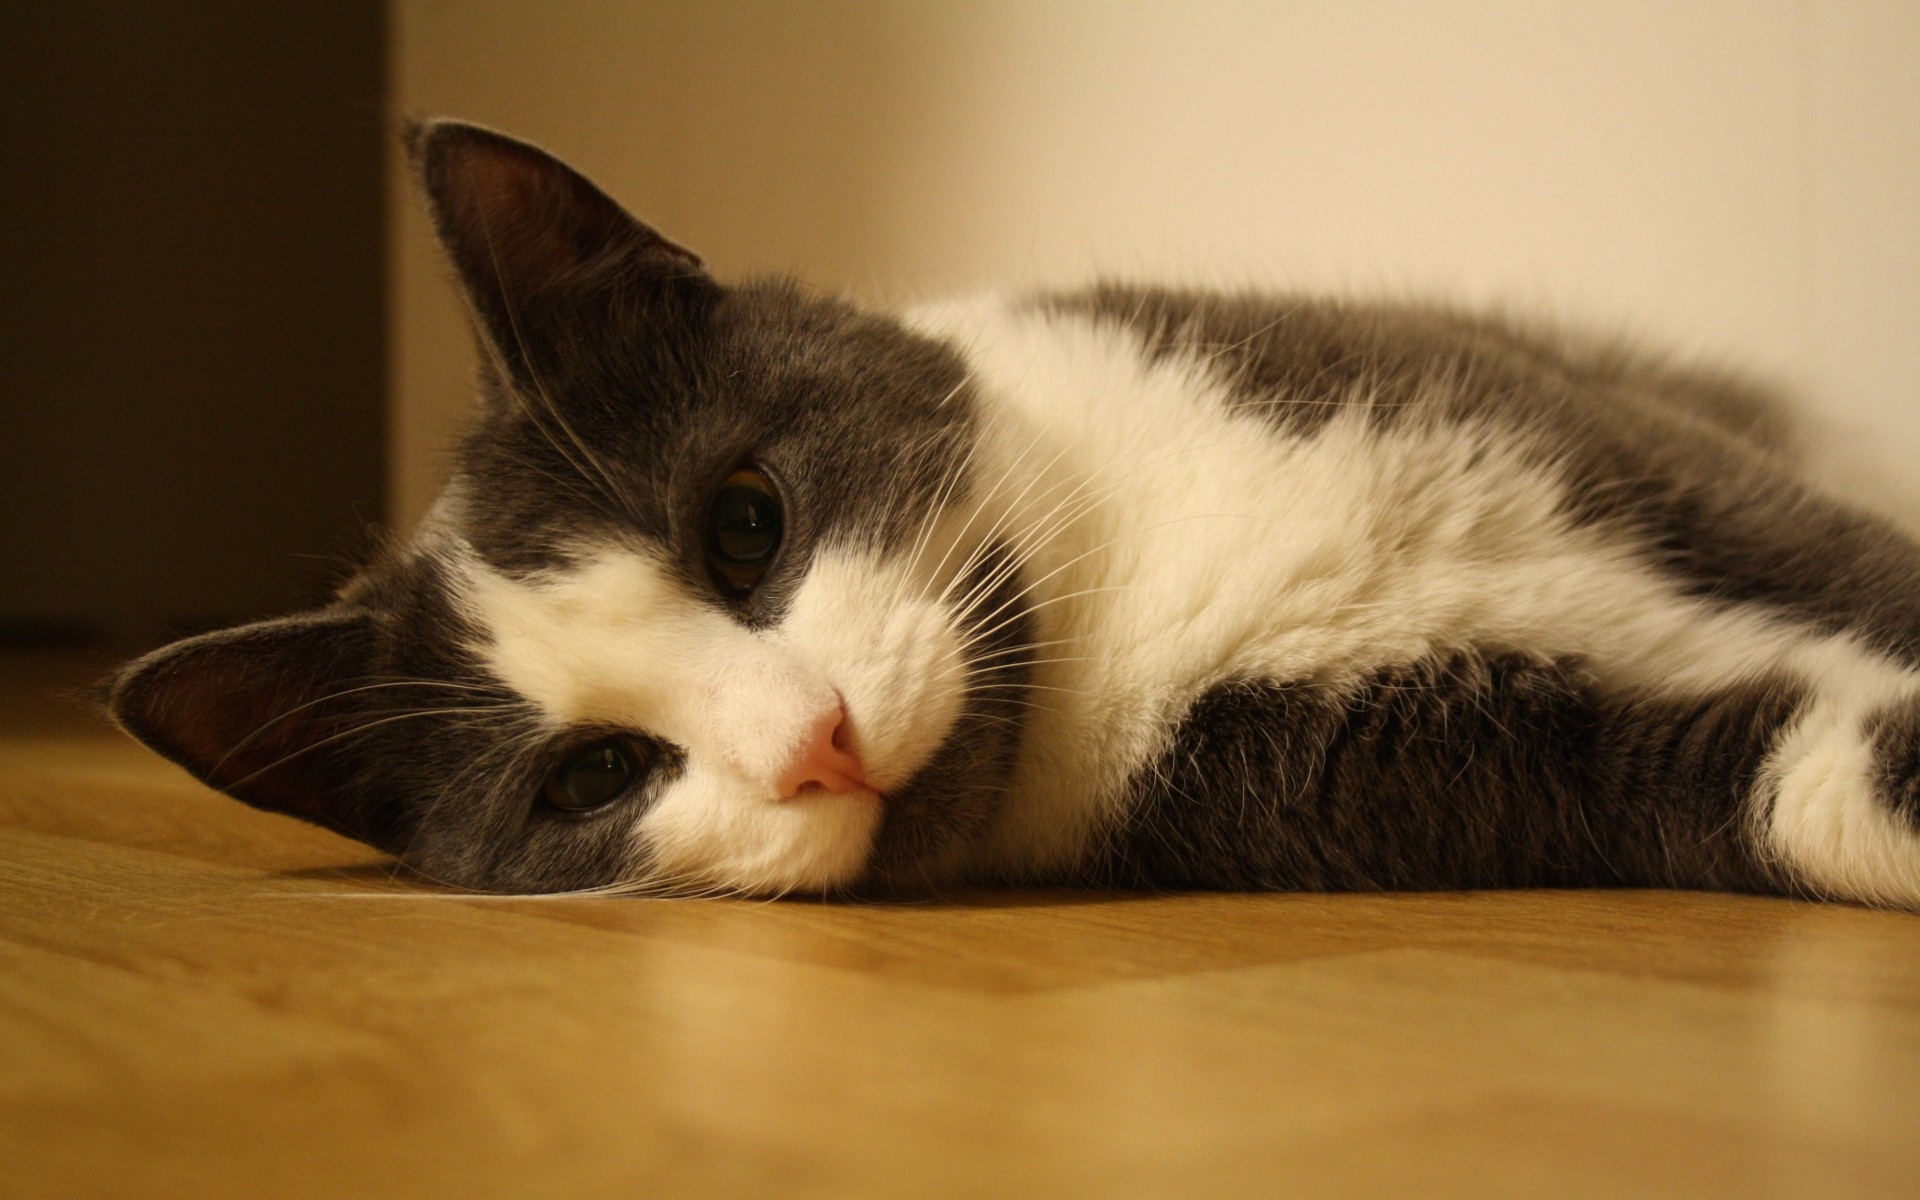 Sweet Cat Lying On The Floor Wallpaper for Desktop 1920x1200